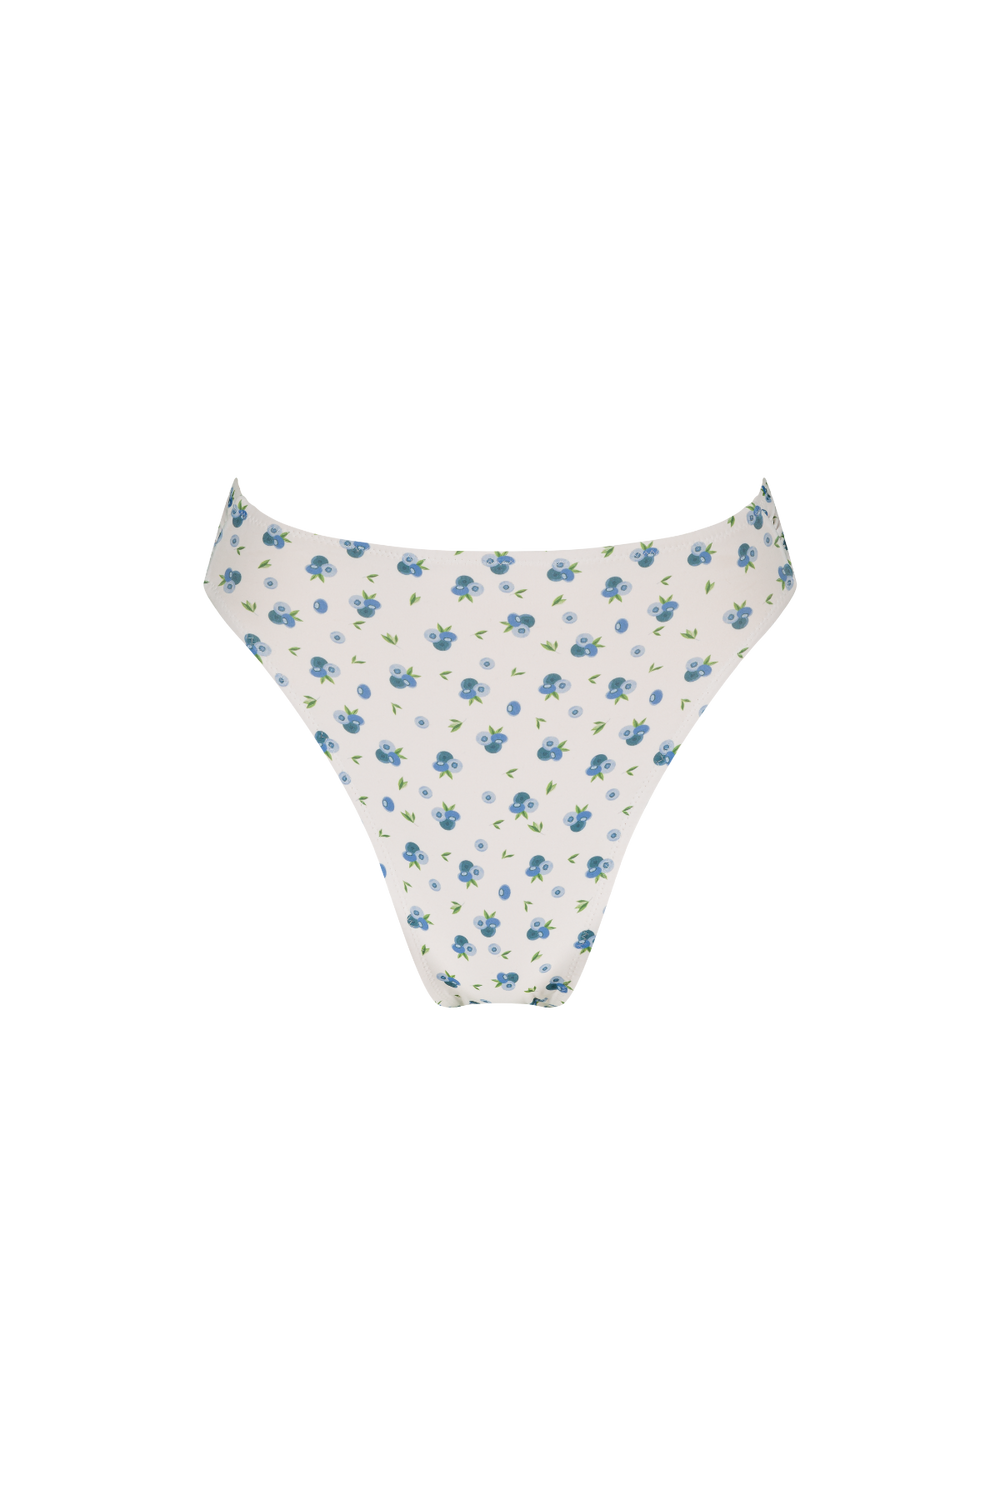 Hirola panty - Blueberry Print 